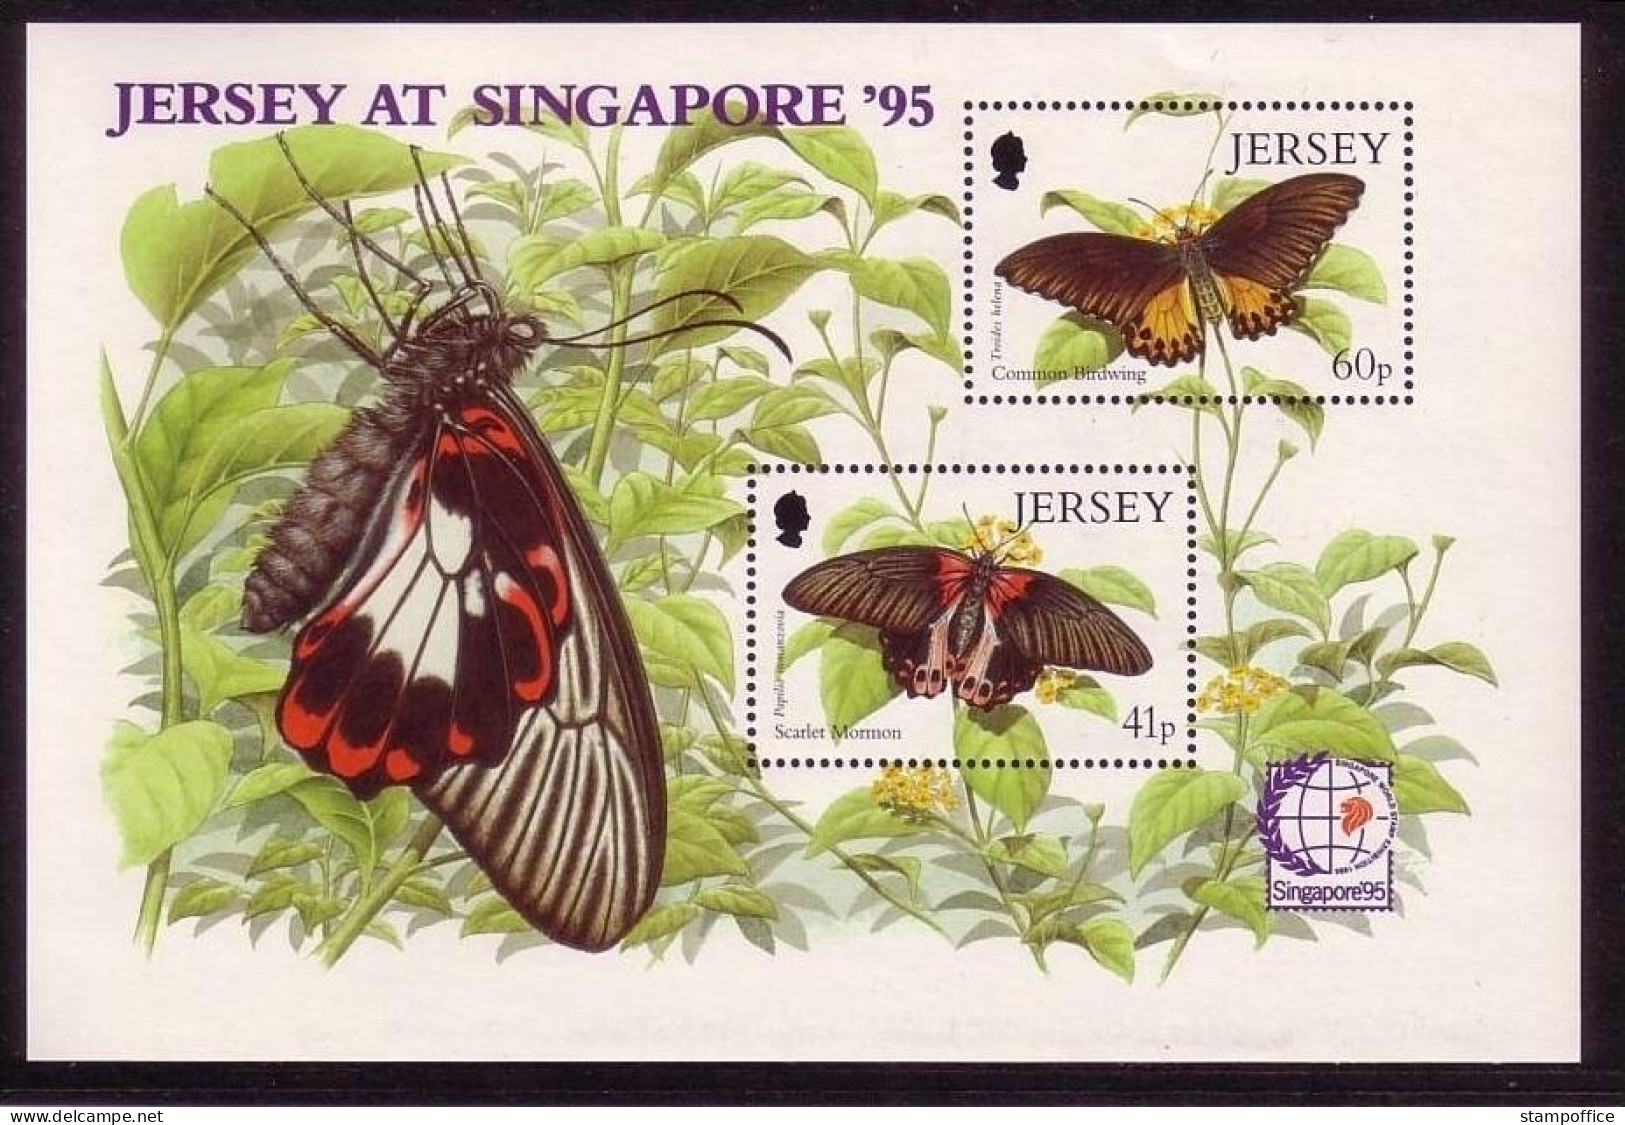 JERSEY BLOCK 11 POSTFRISCH(MINT) SCHMETTERLINGE BUTTERFLIES SINGAPORE `95 - Vlinders